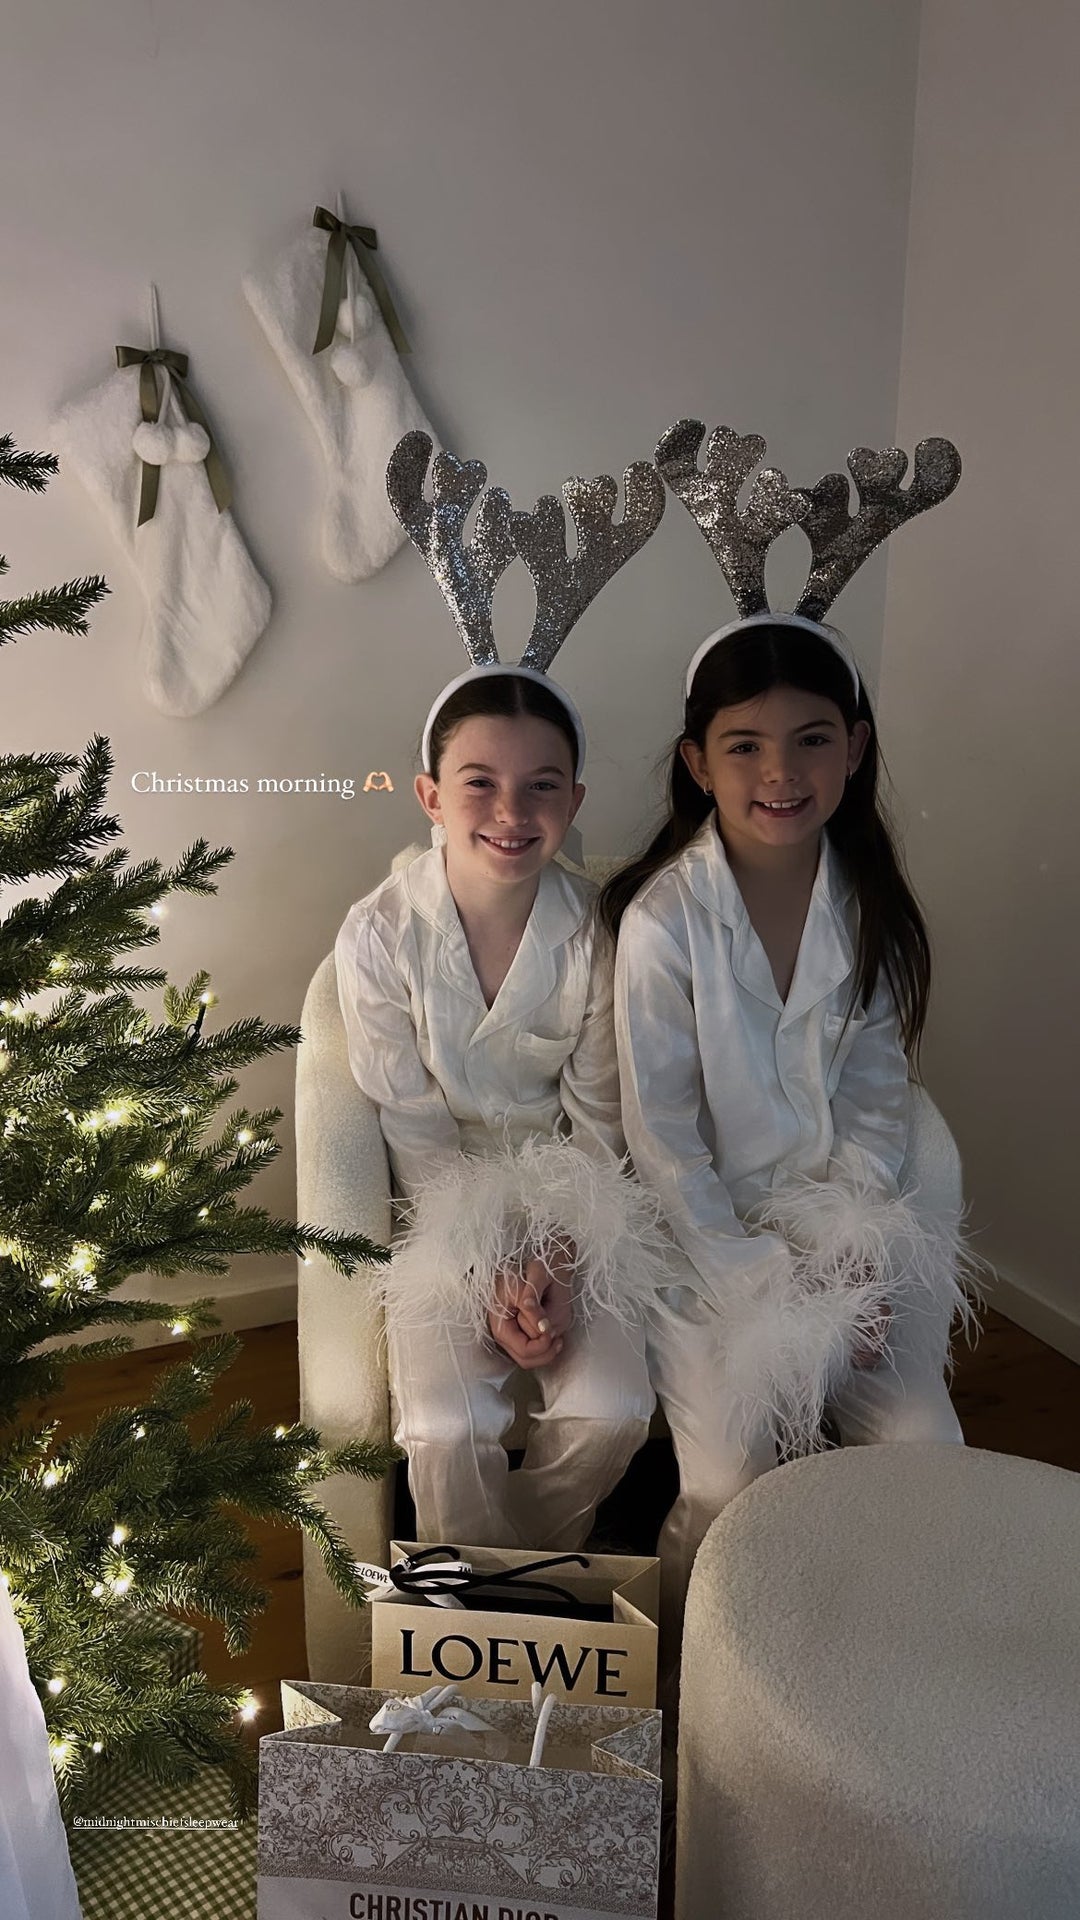 Kids Feather Pyjama Winter Set - Ivory